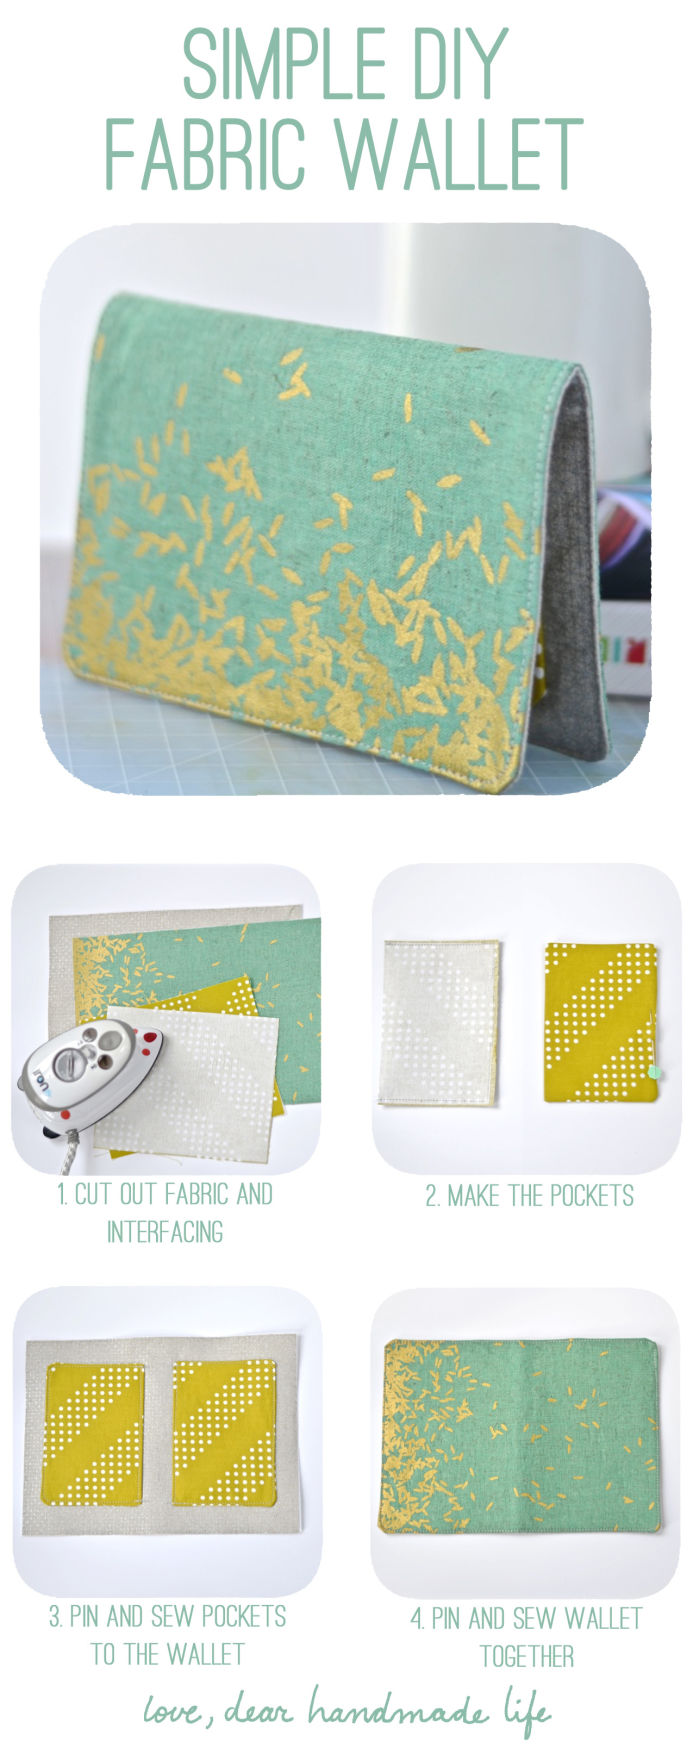 Simple DIY Fabric Wallet from Dear Handmade Life